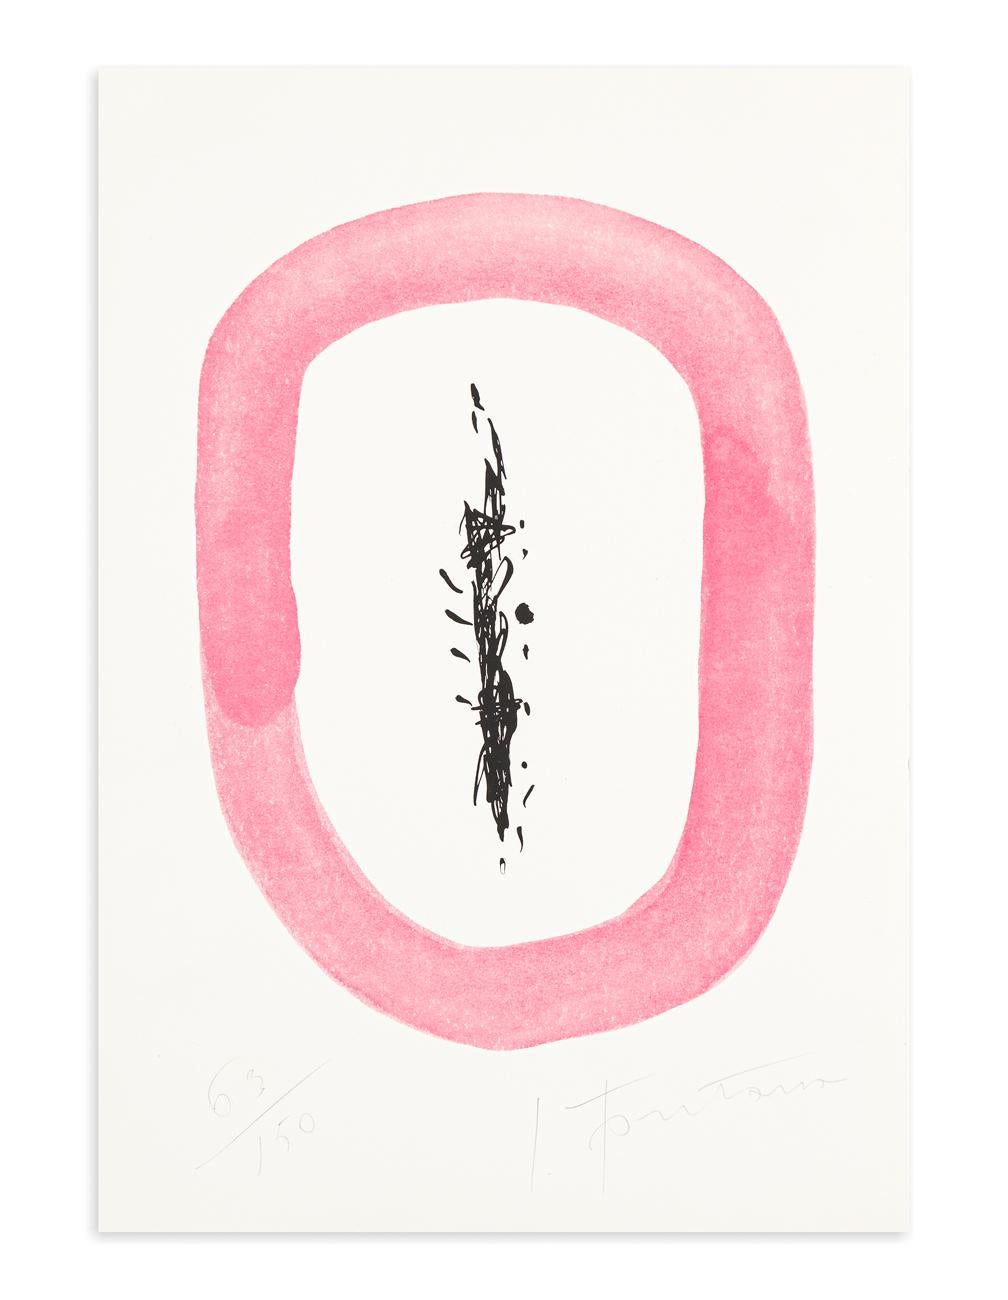 Lucio Fontana Abstract Print - Spatial Concept from Six contes de La Fontaine, Spatialism, Print, Pink